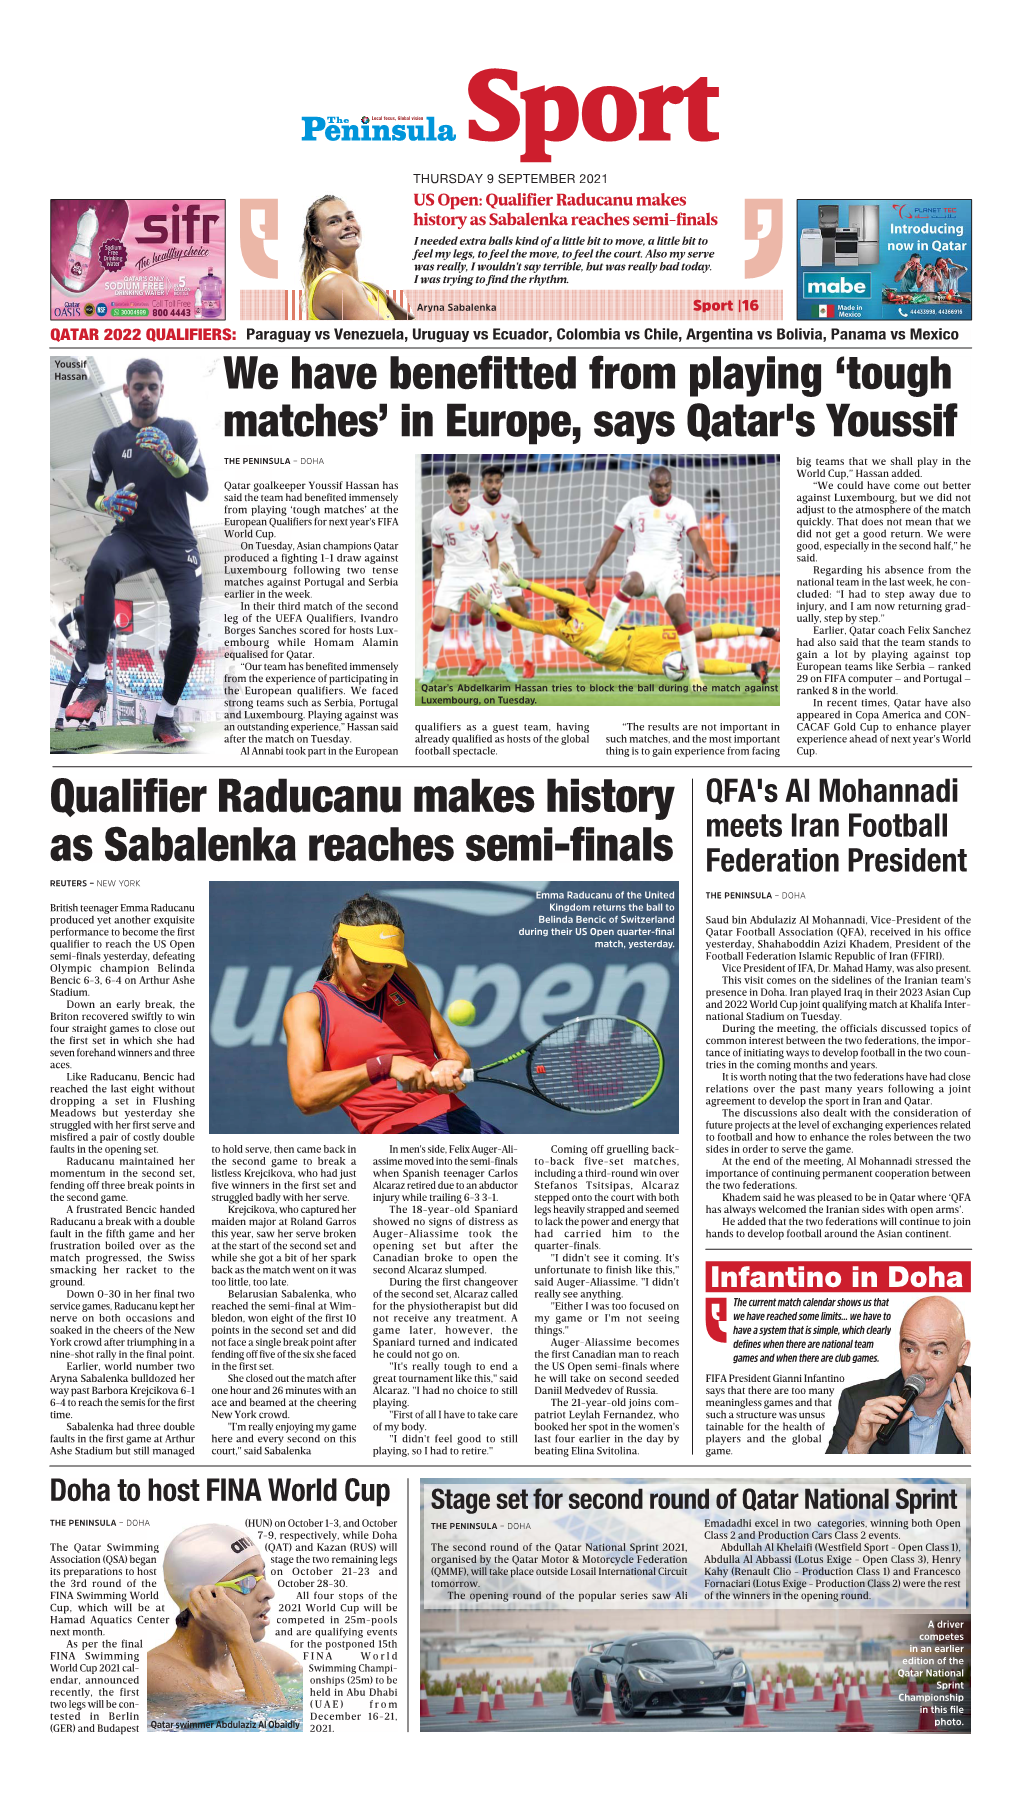 Qualifier Raducanu Makes History As Sabalenka Reaches Semi-Finals